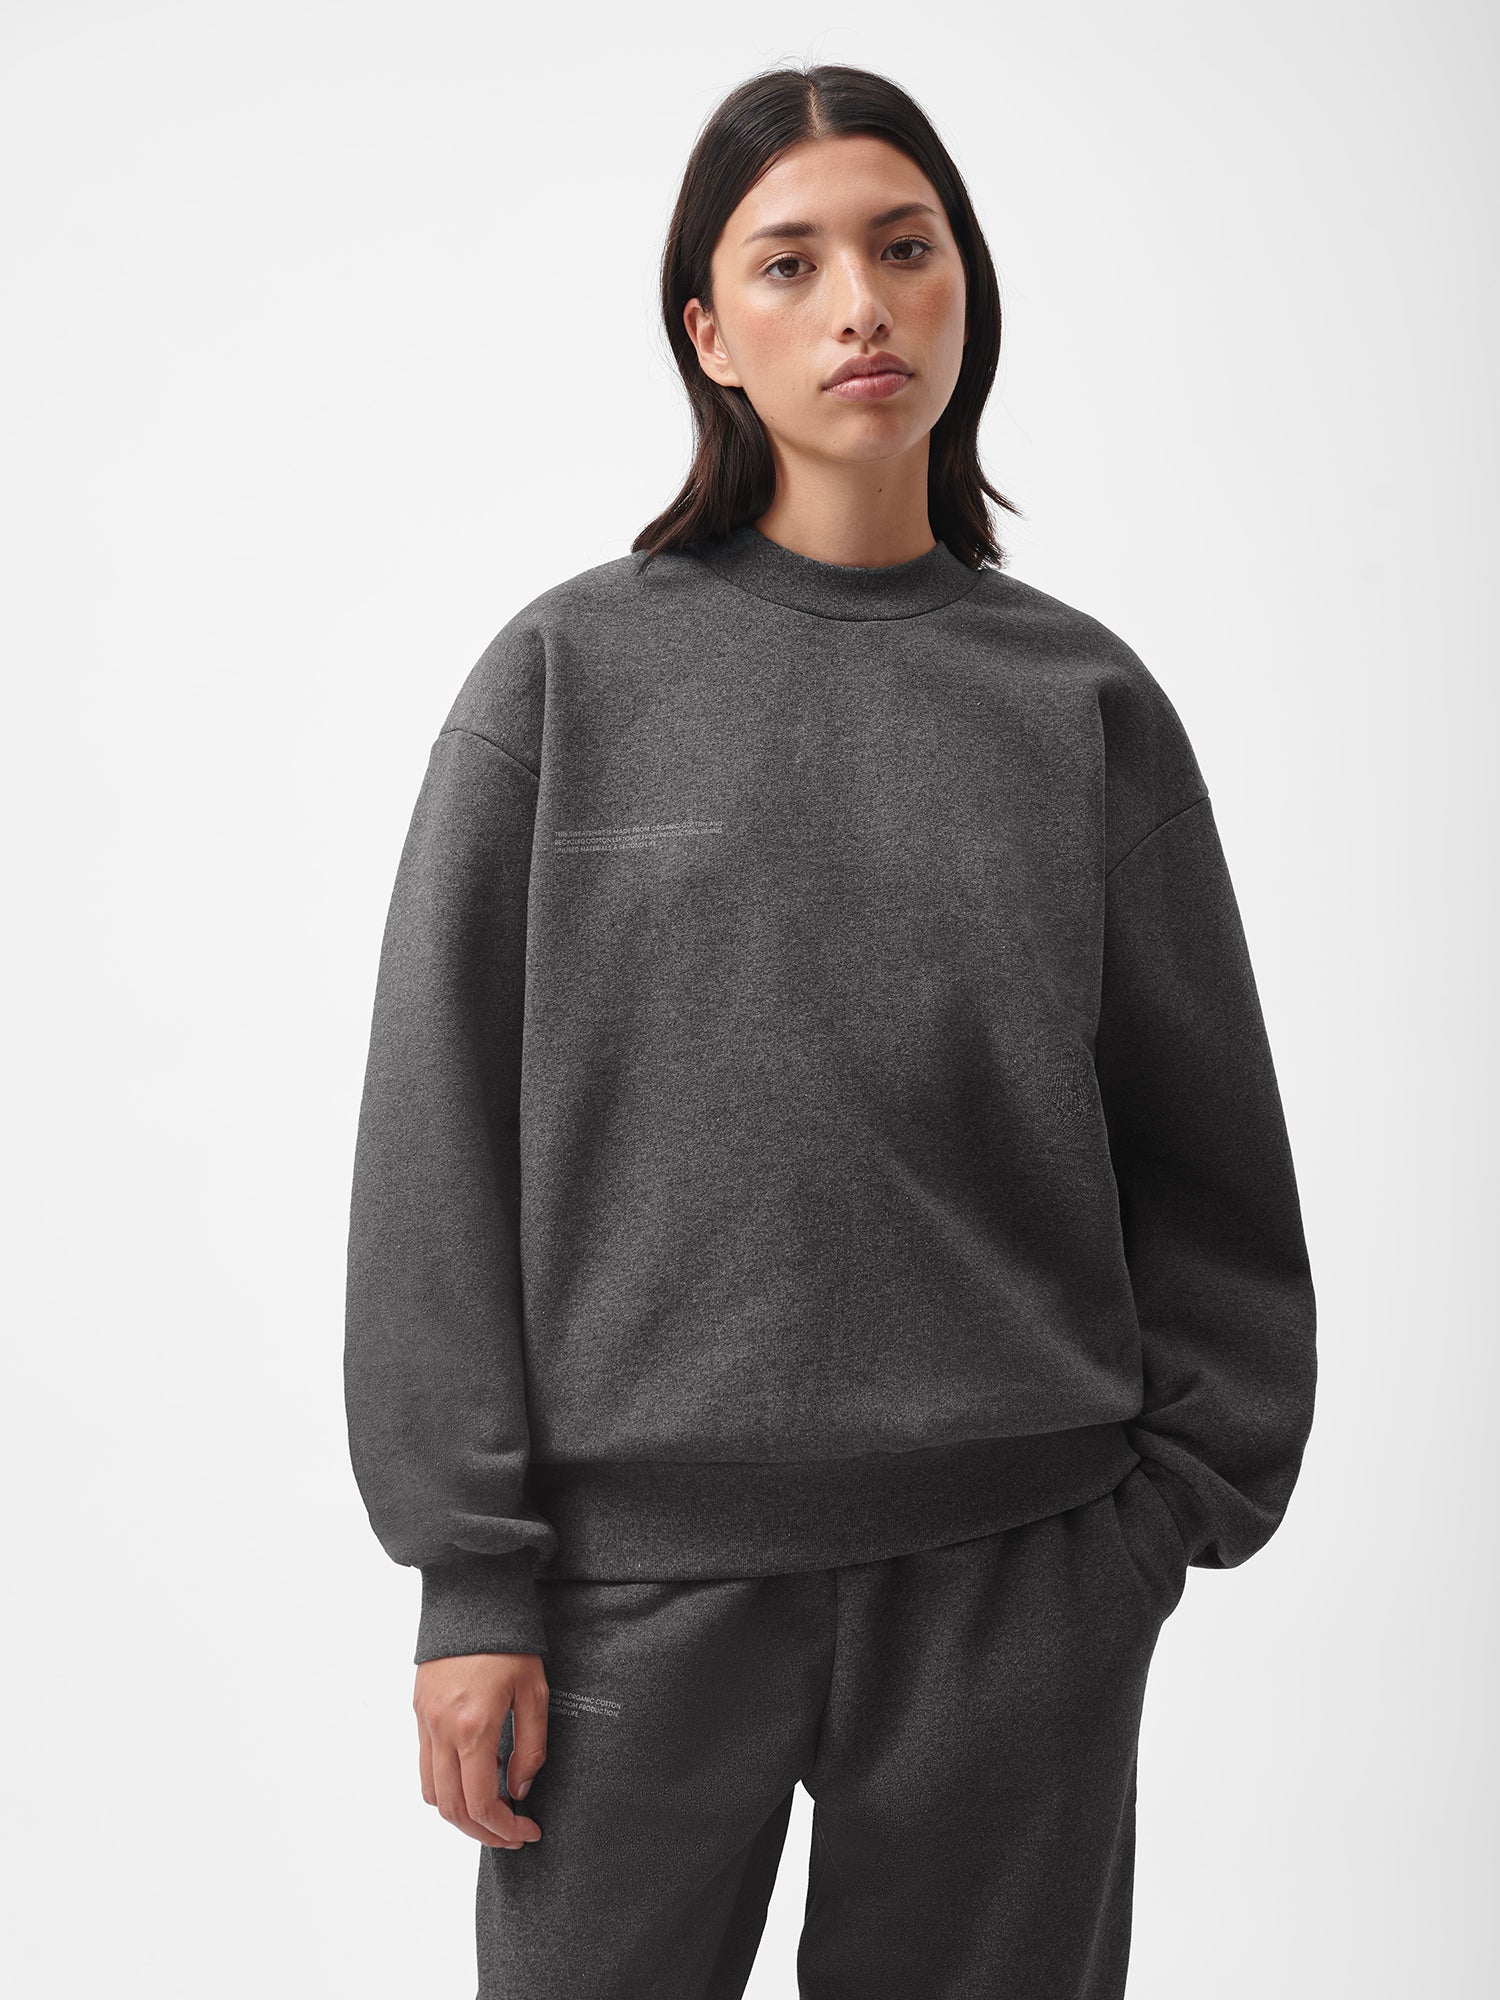 Reclaimed Cotton Sweatshirt - Reclaim Charcoal - Pangaia